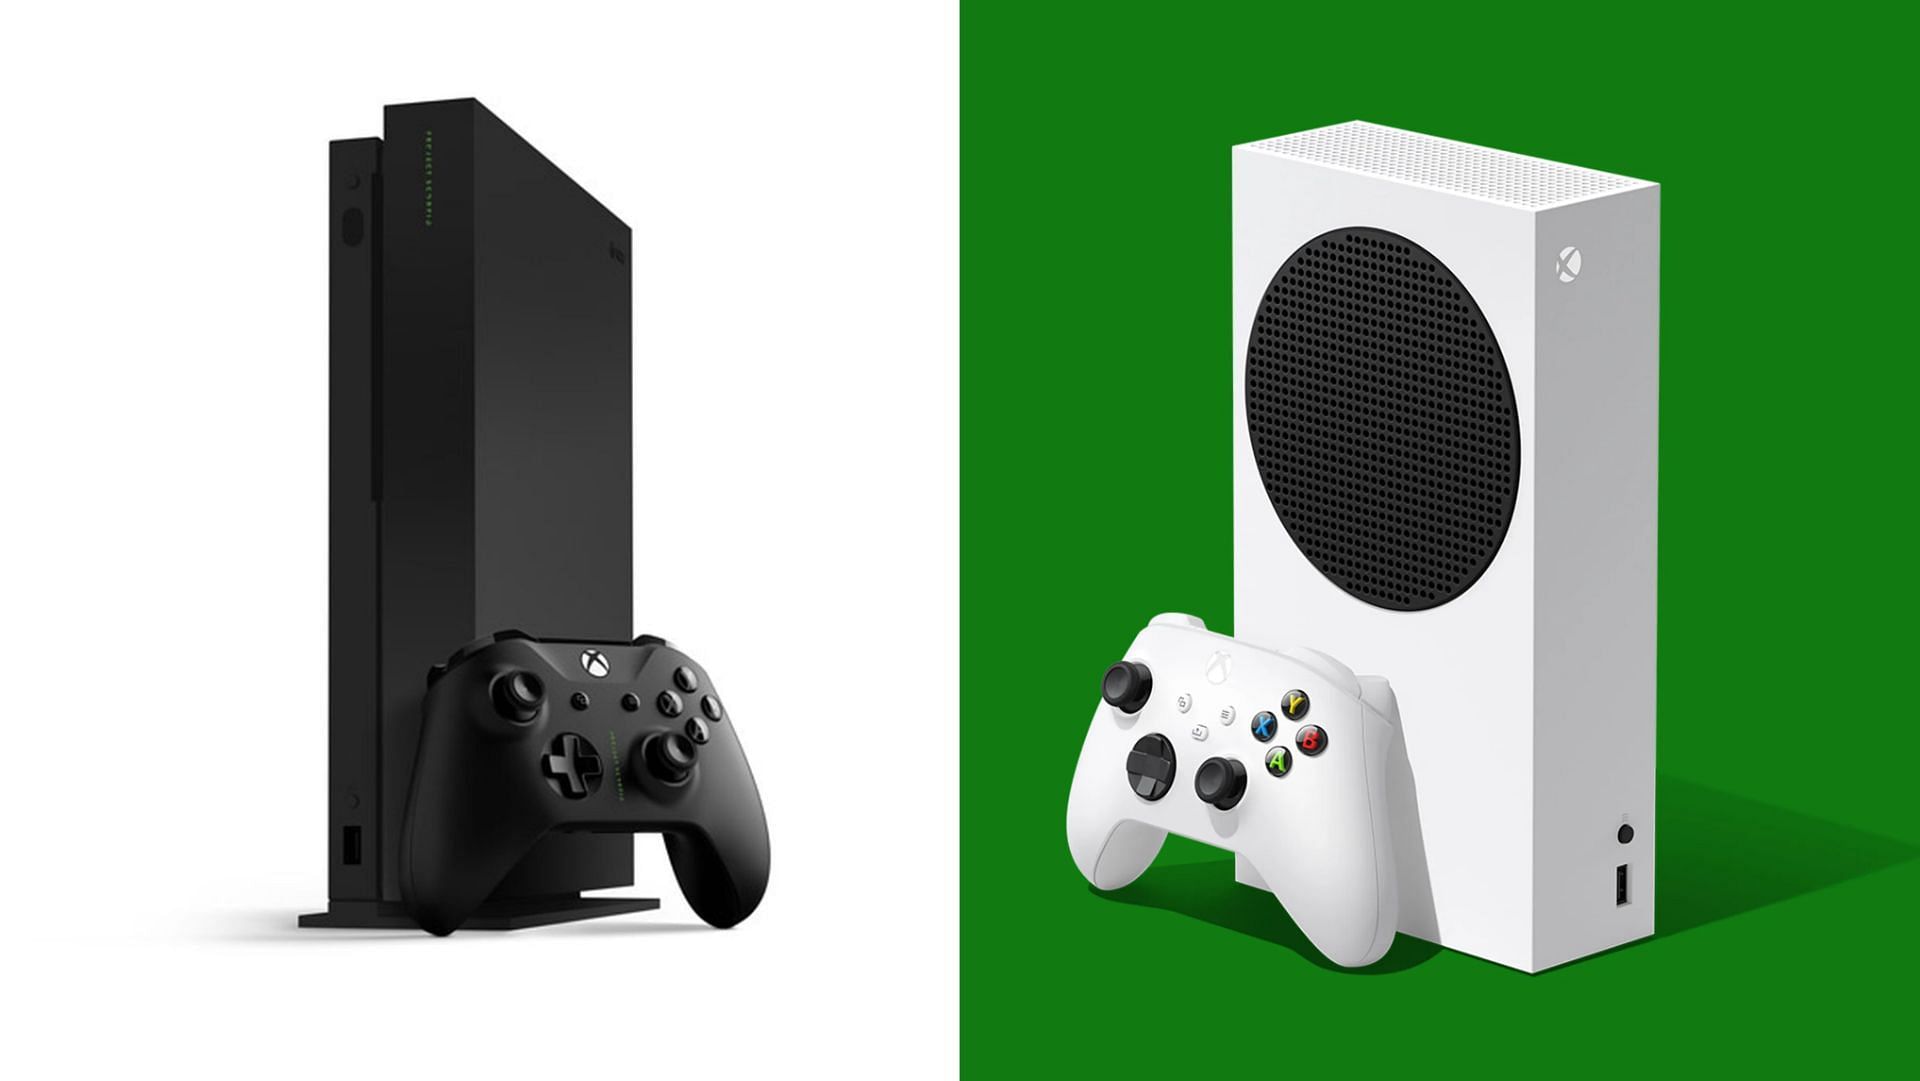 Xbox One X vs Xbox Series S vs Xbox Series X Comparison - Frame